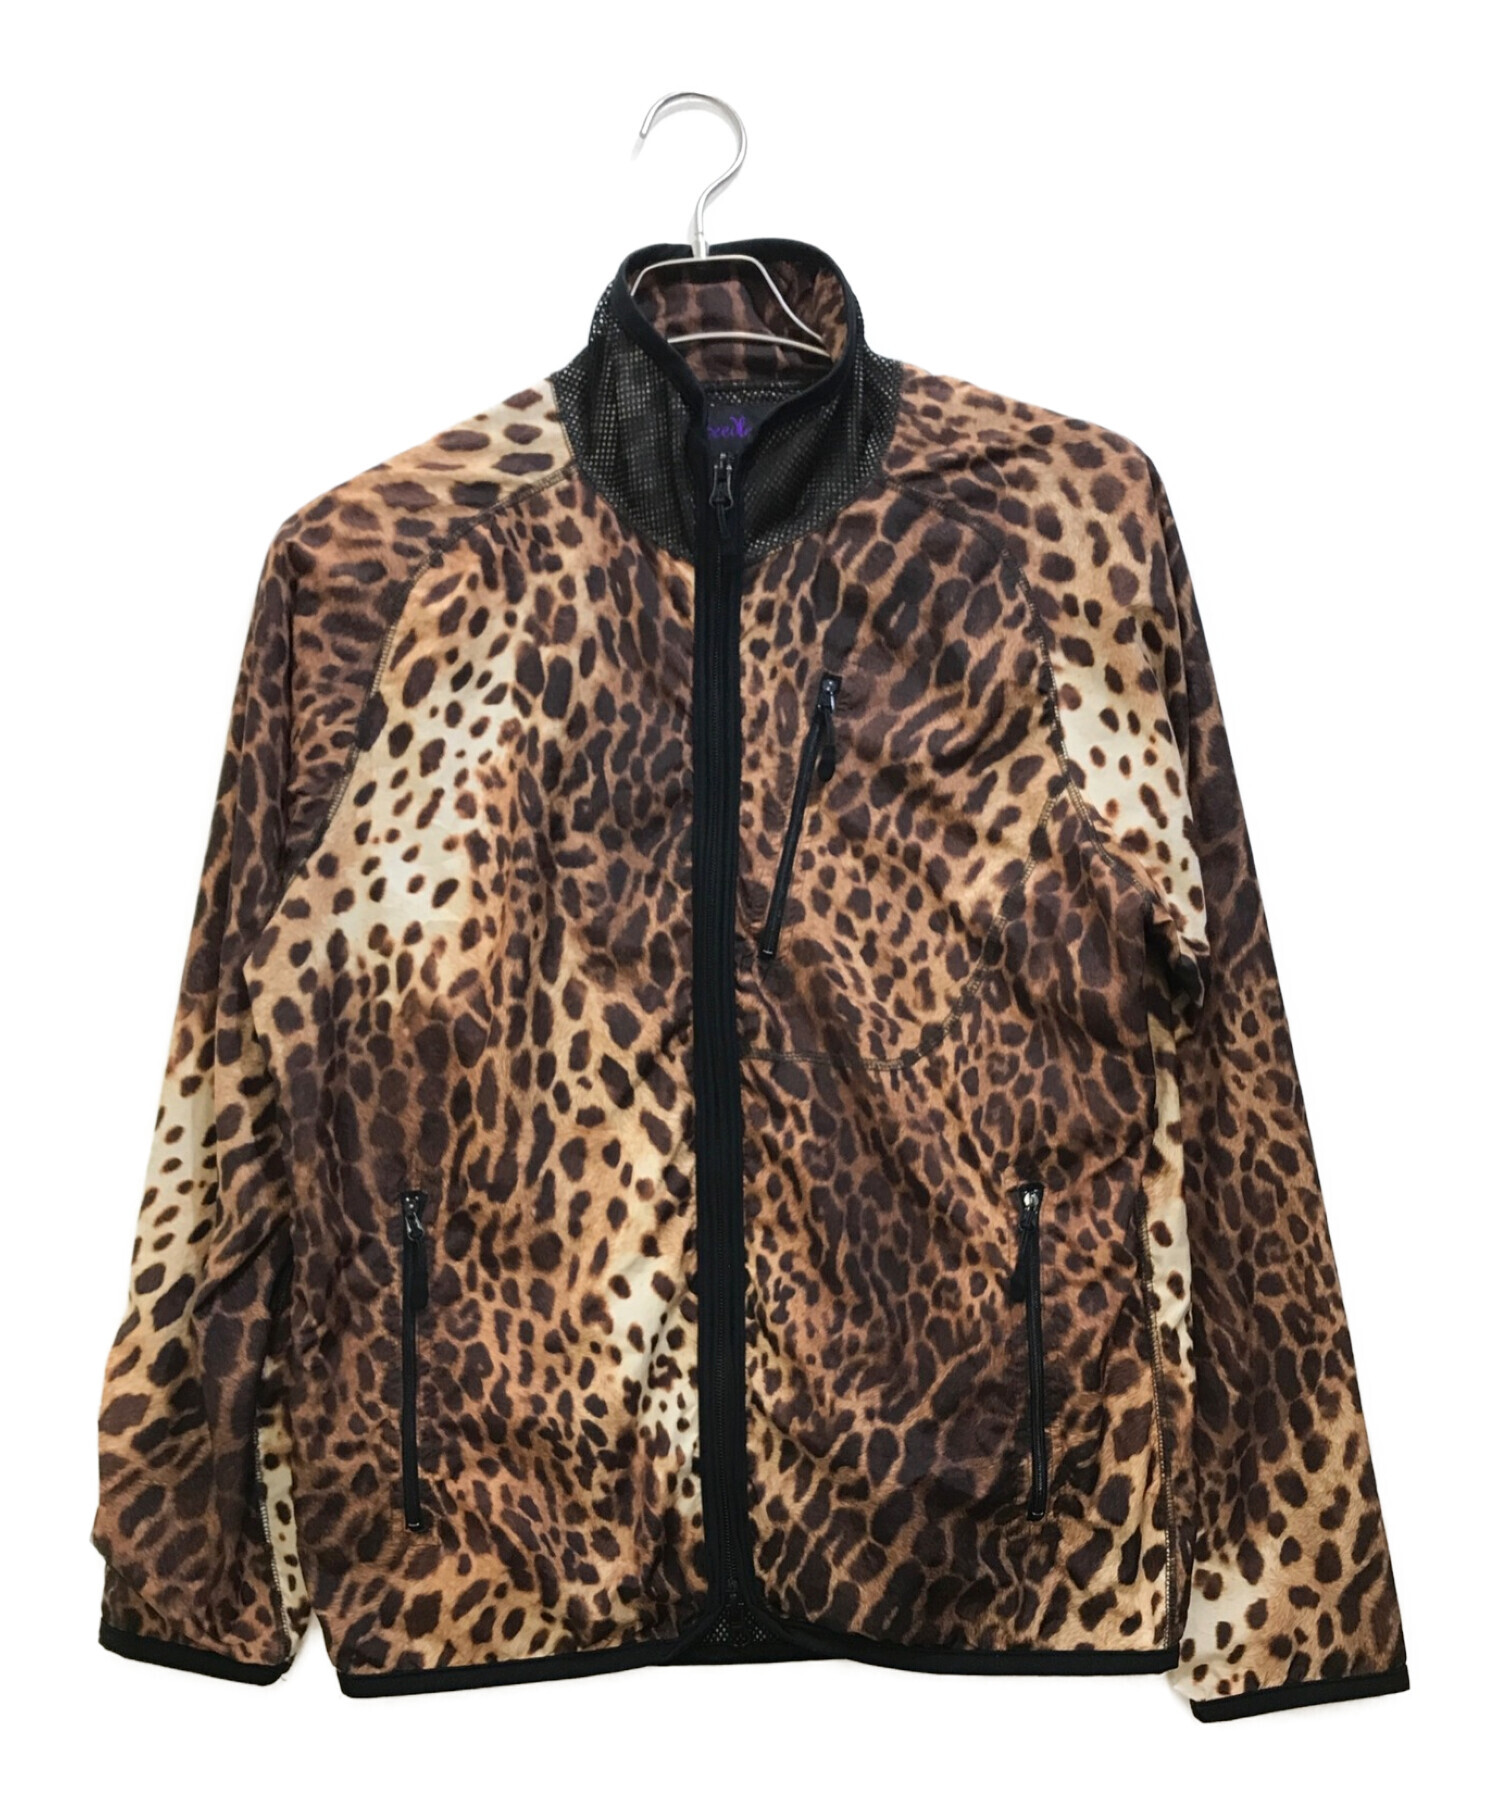 Needles Sports Wear Leopard Jacket XS | nate-hospital.com